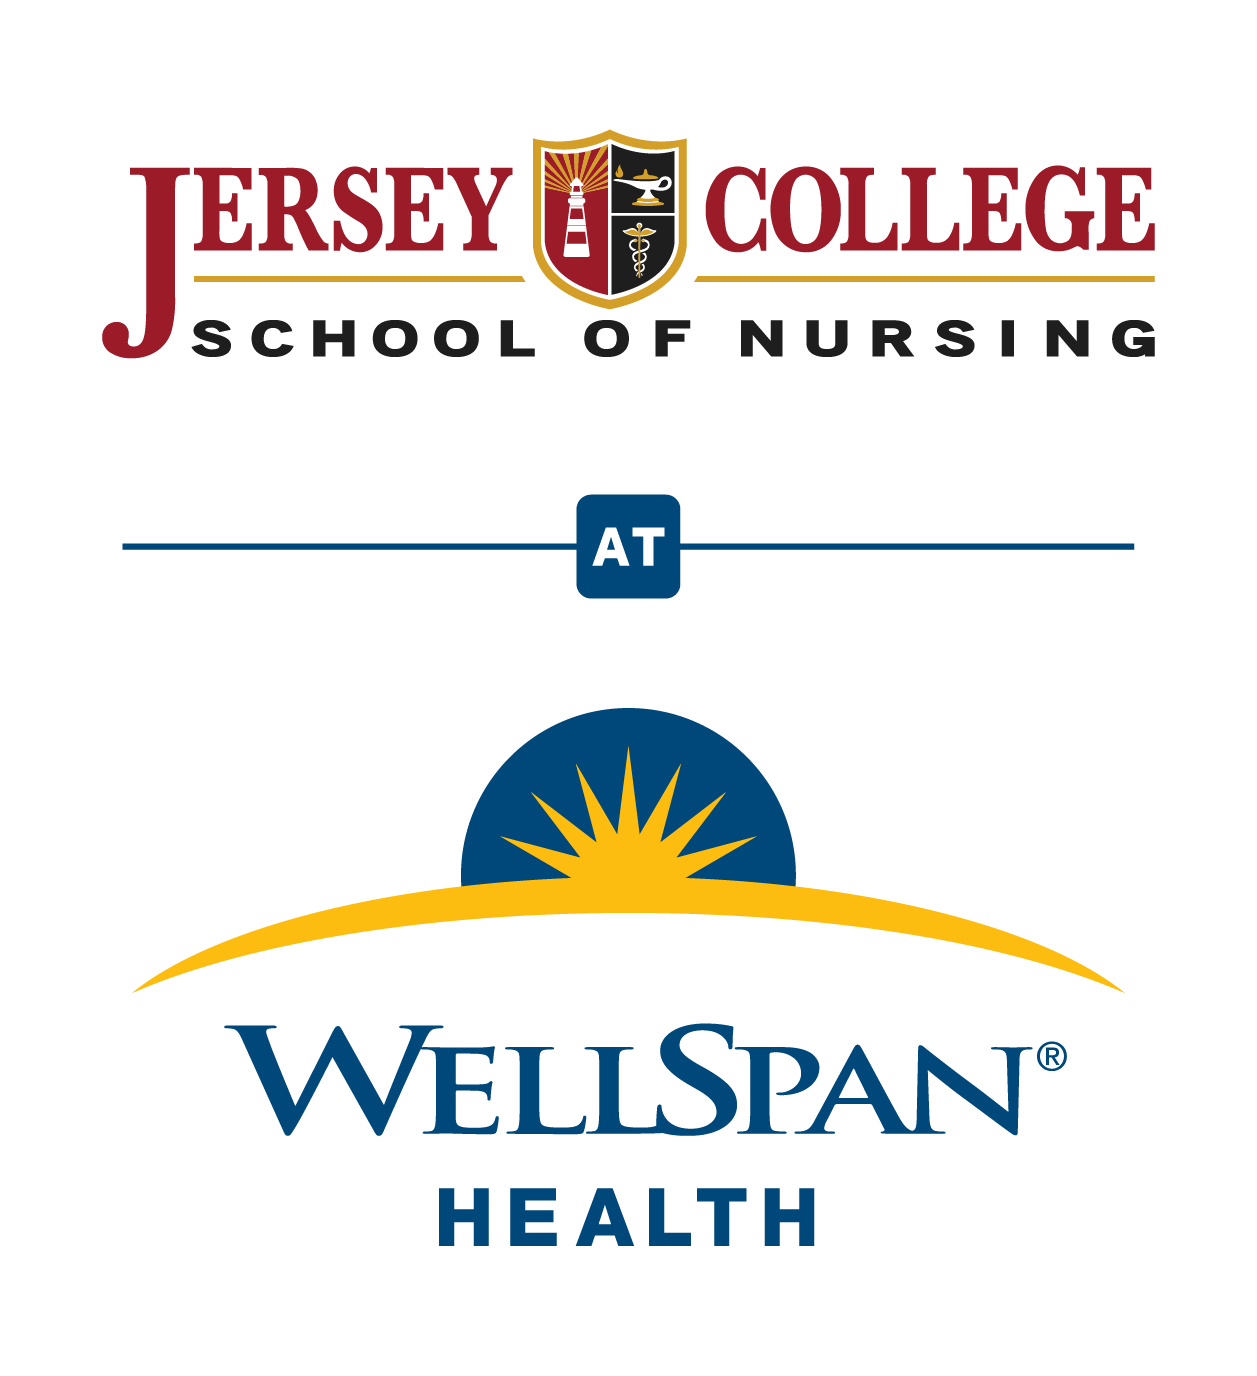 Jersey_College_-_School_of_Nursing_at_WellSpan_Logo_Vertical.png